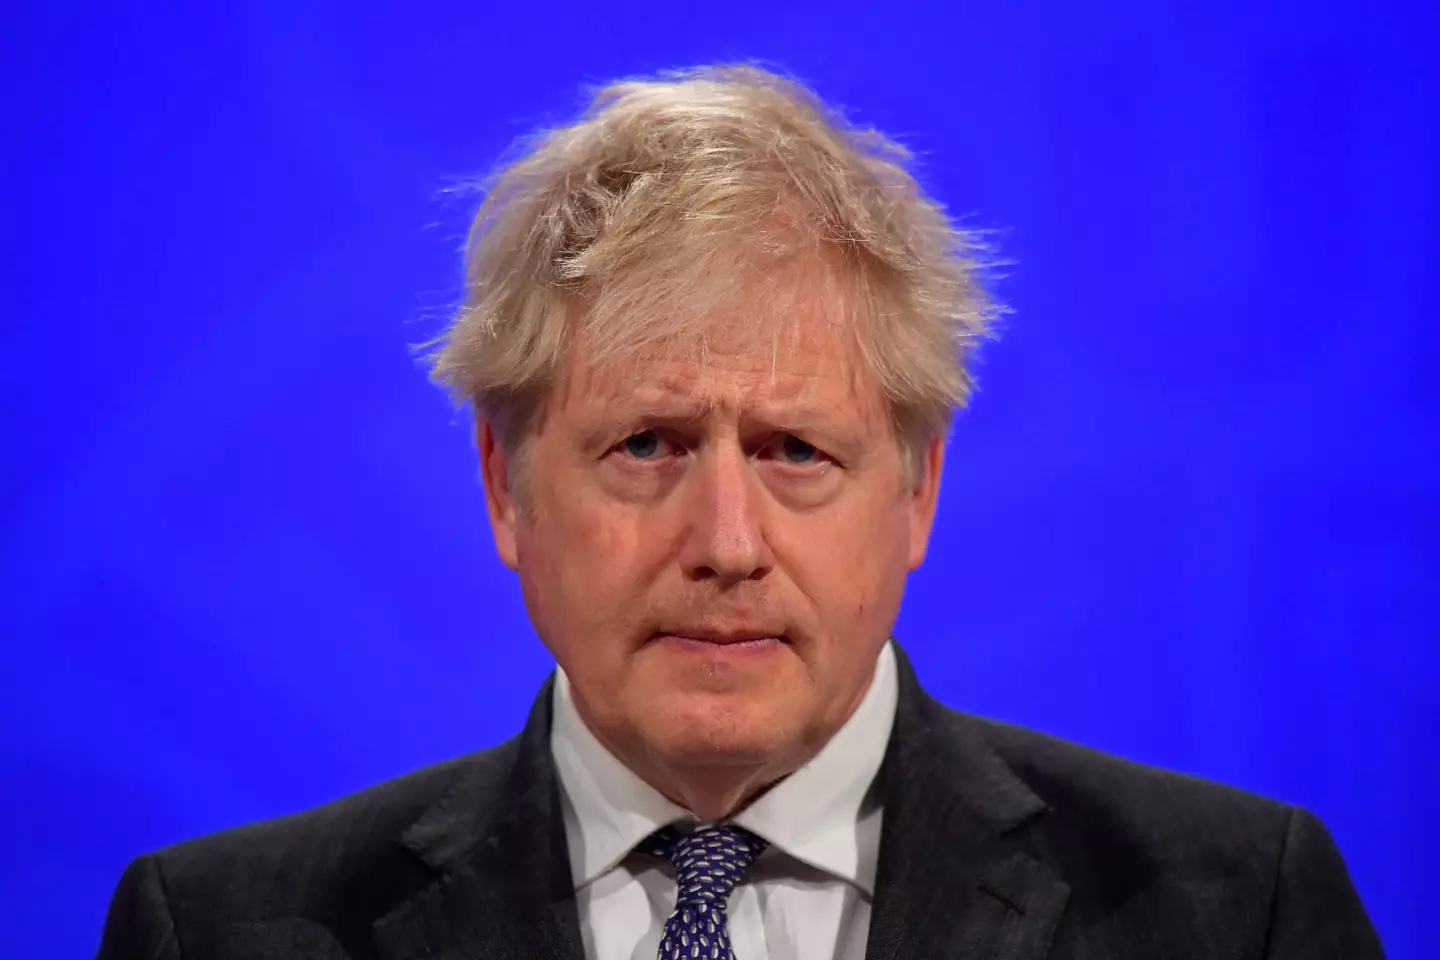 Boris Johnson has previously condemned the Russian invasion of Ukraine.